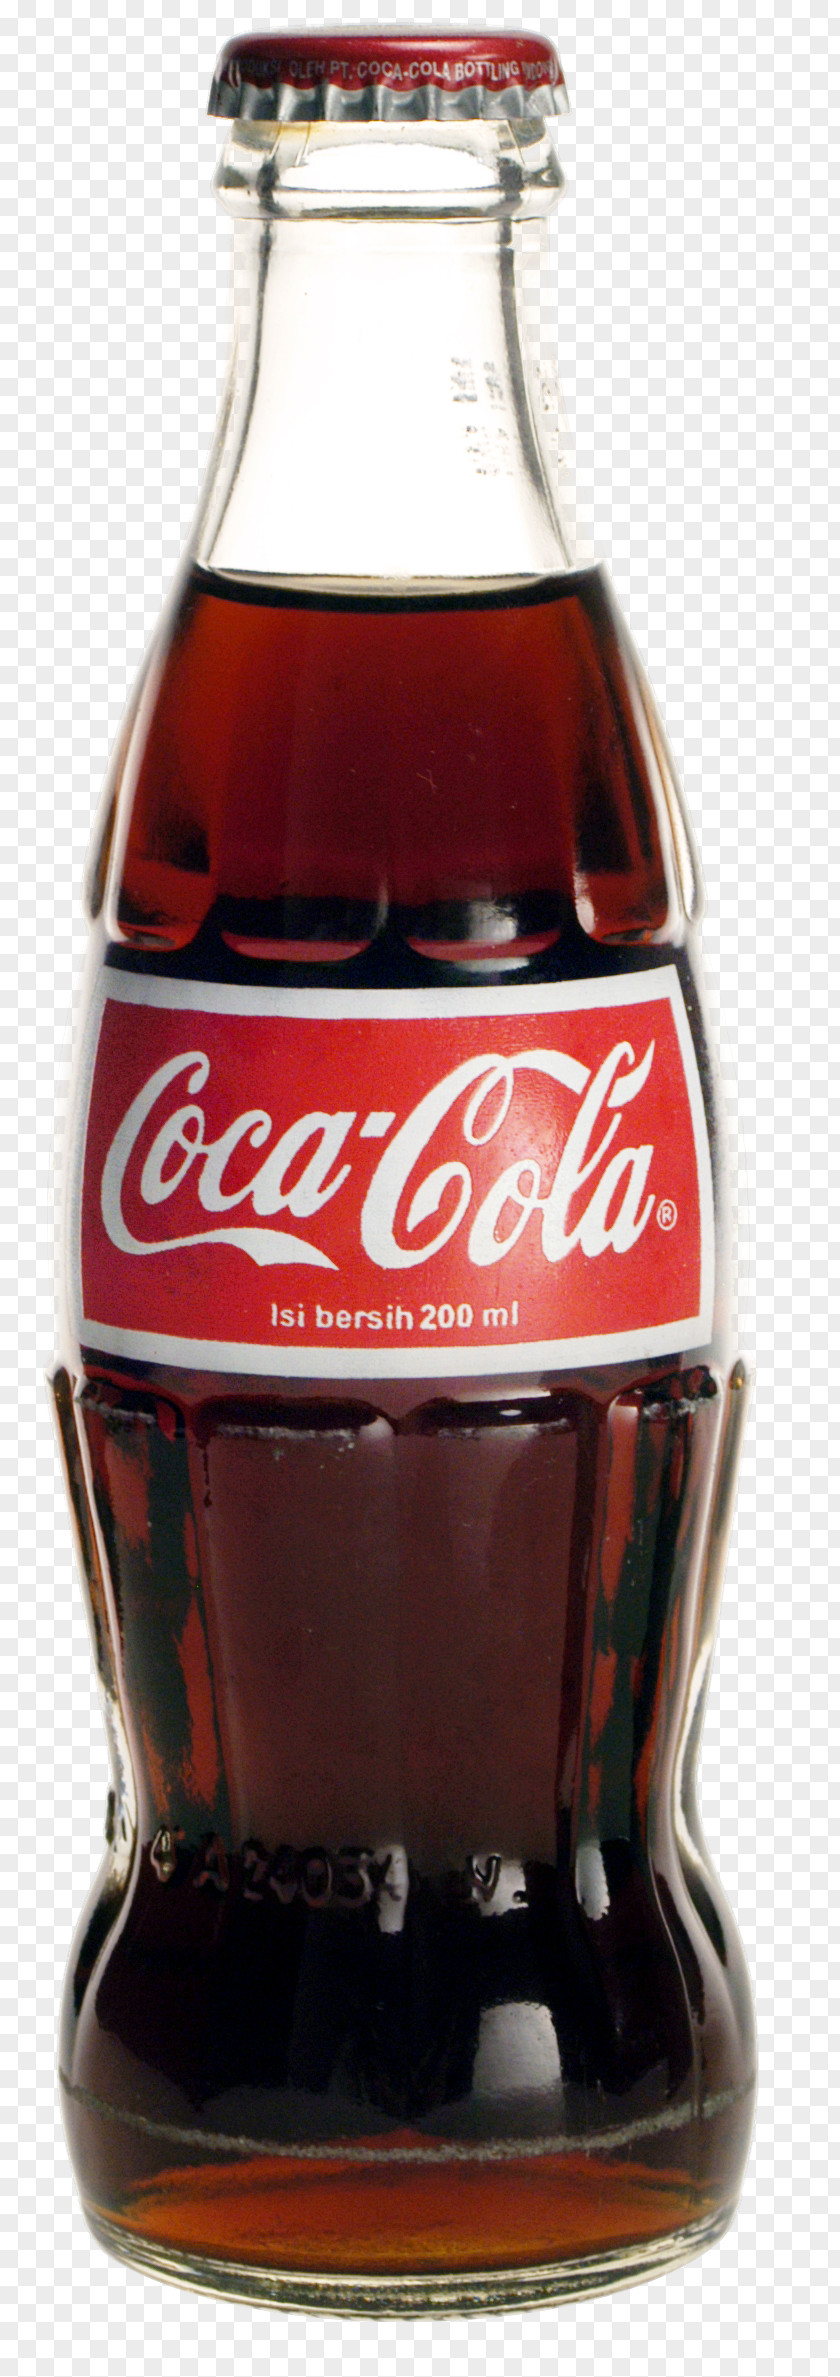 Coca Cola Bottle Image The Coca-Cola Company Erythroxylum PNG